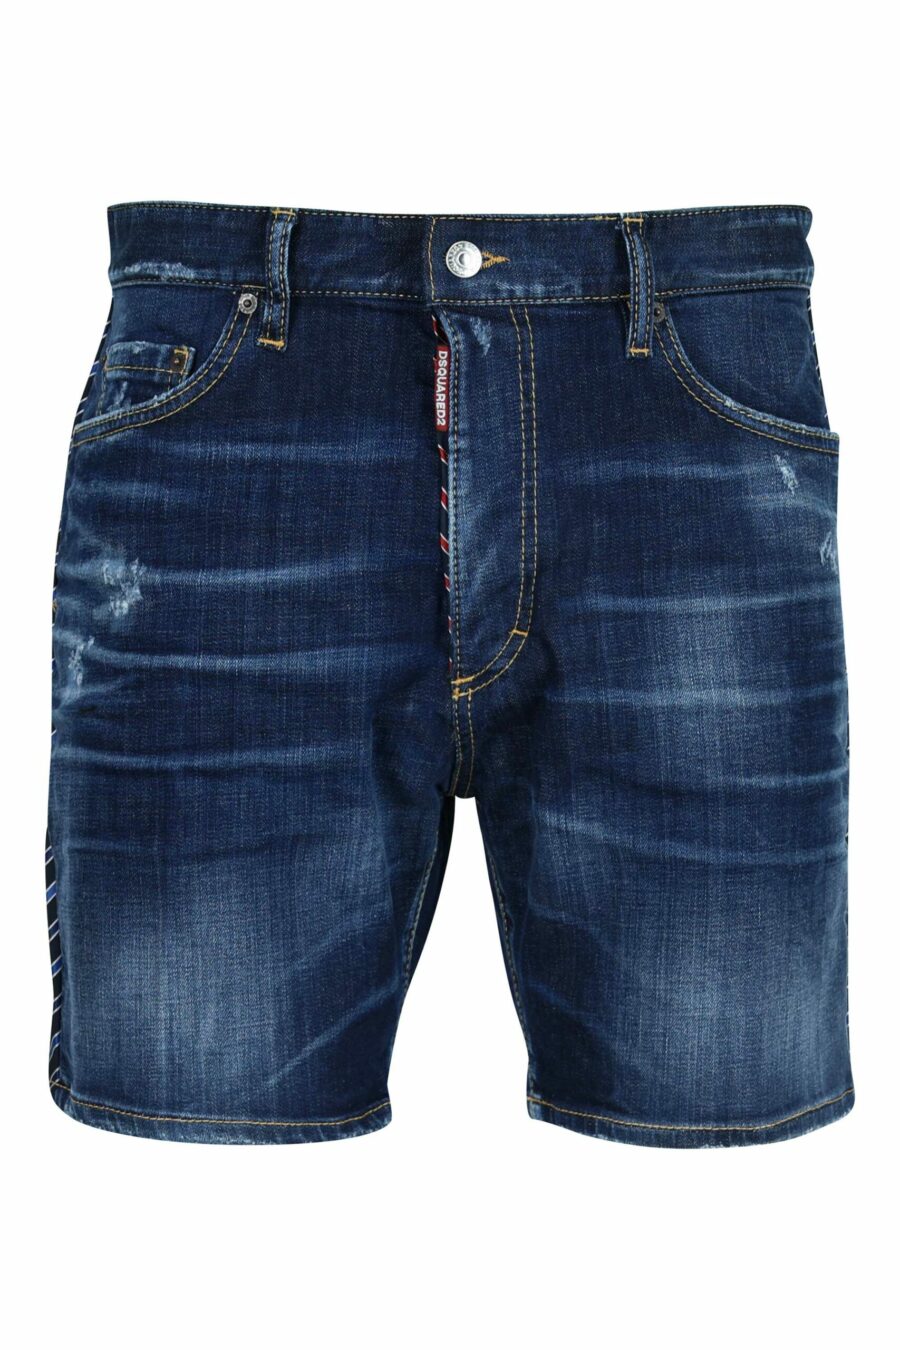 Blue denim shorts "marine short" - 8054148477691 scaled